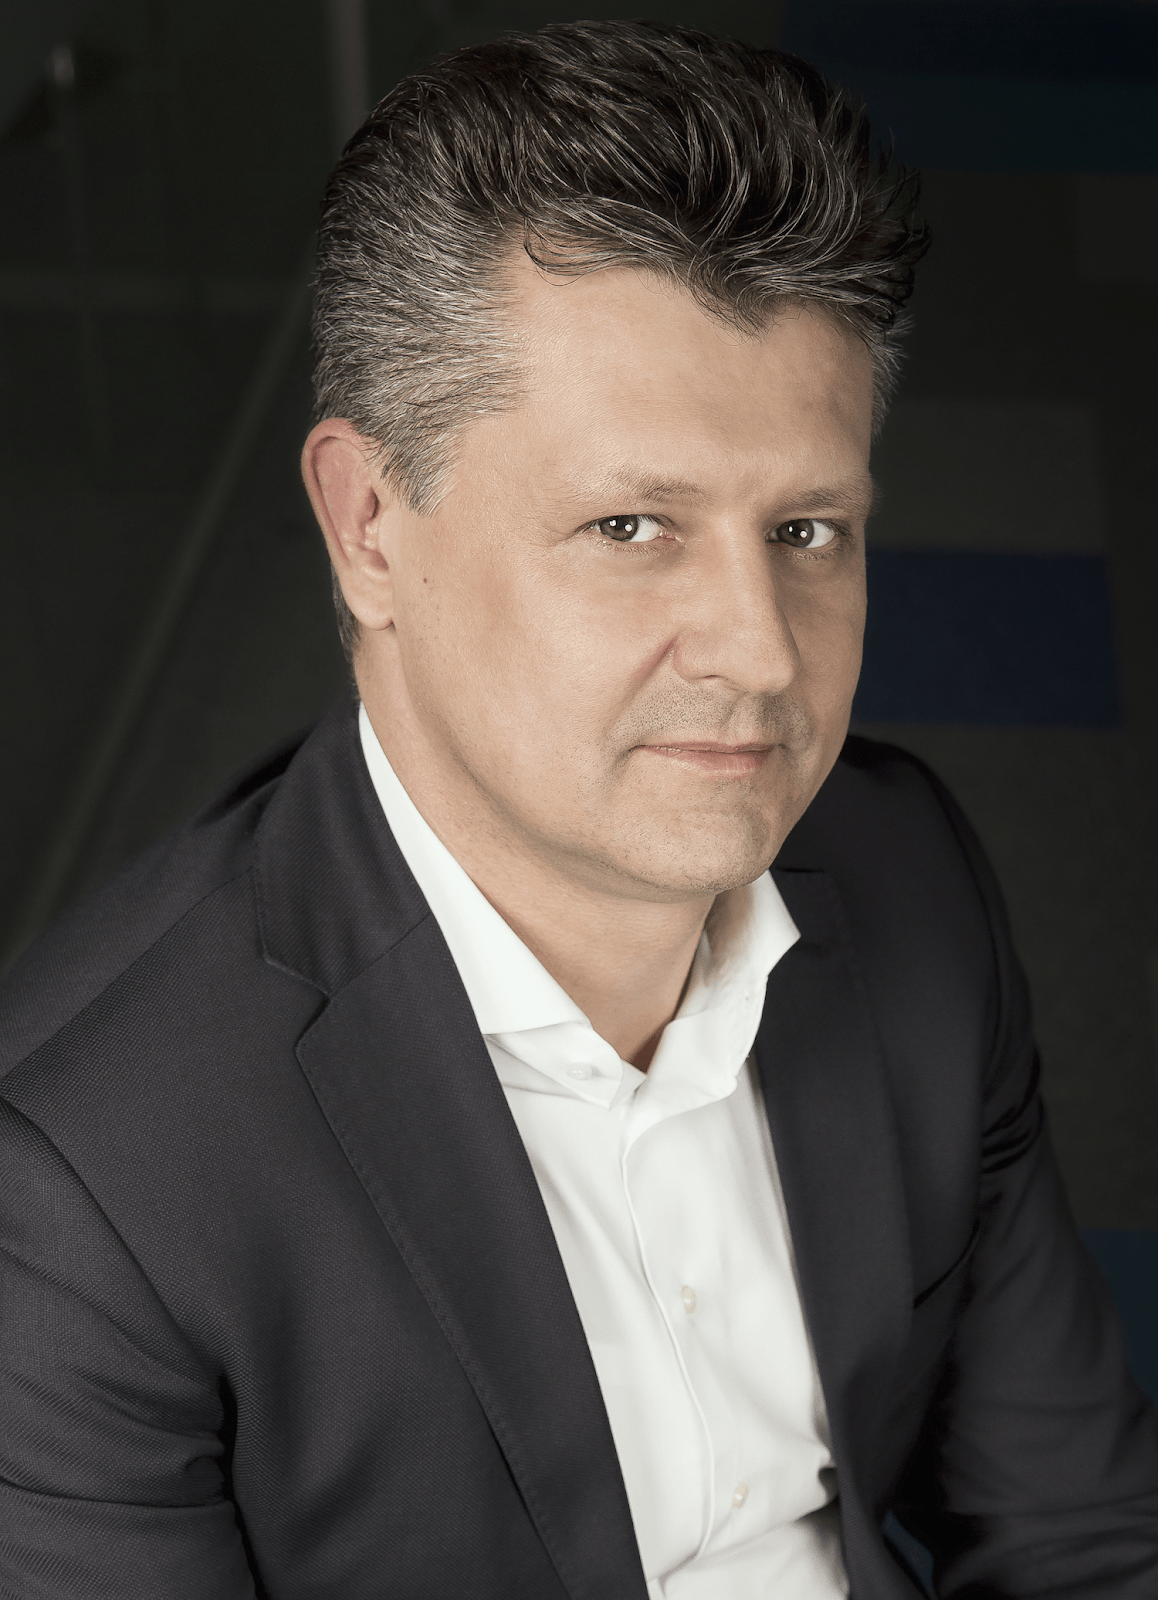 Artur Wojtaszek is a CEO at OEX E-Business and OEX24.com